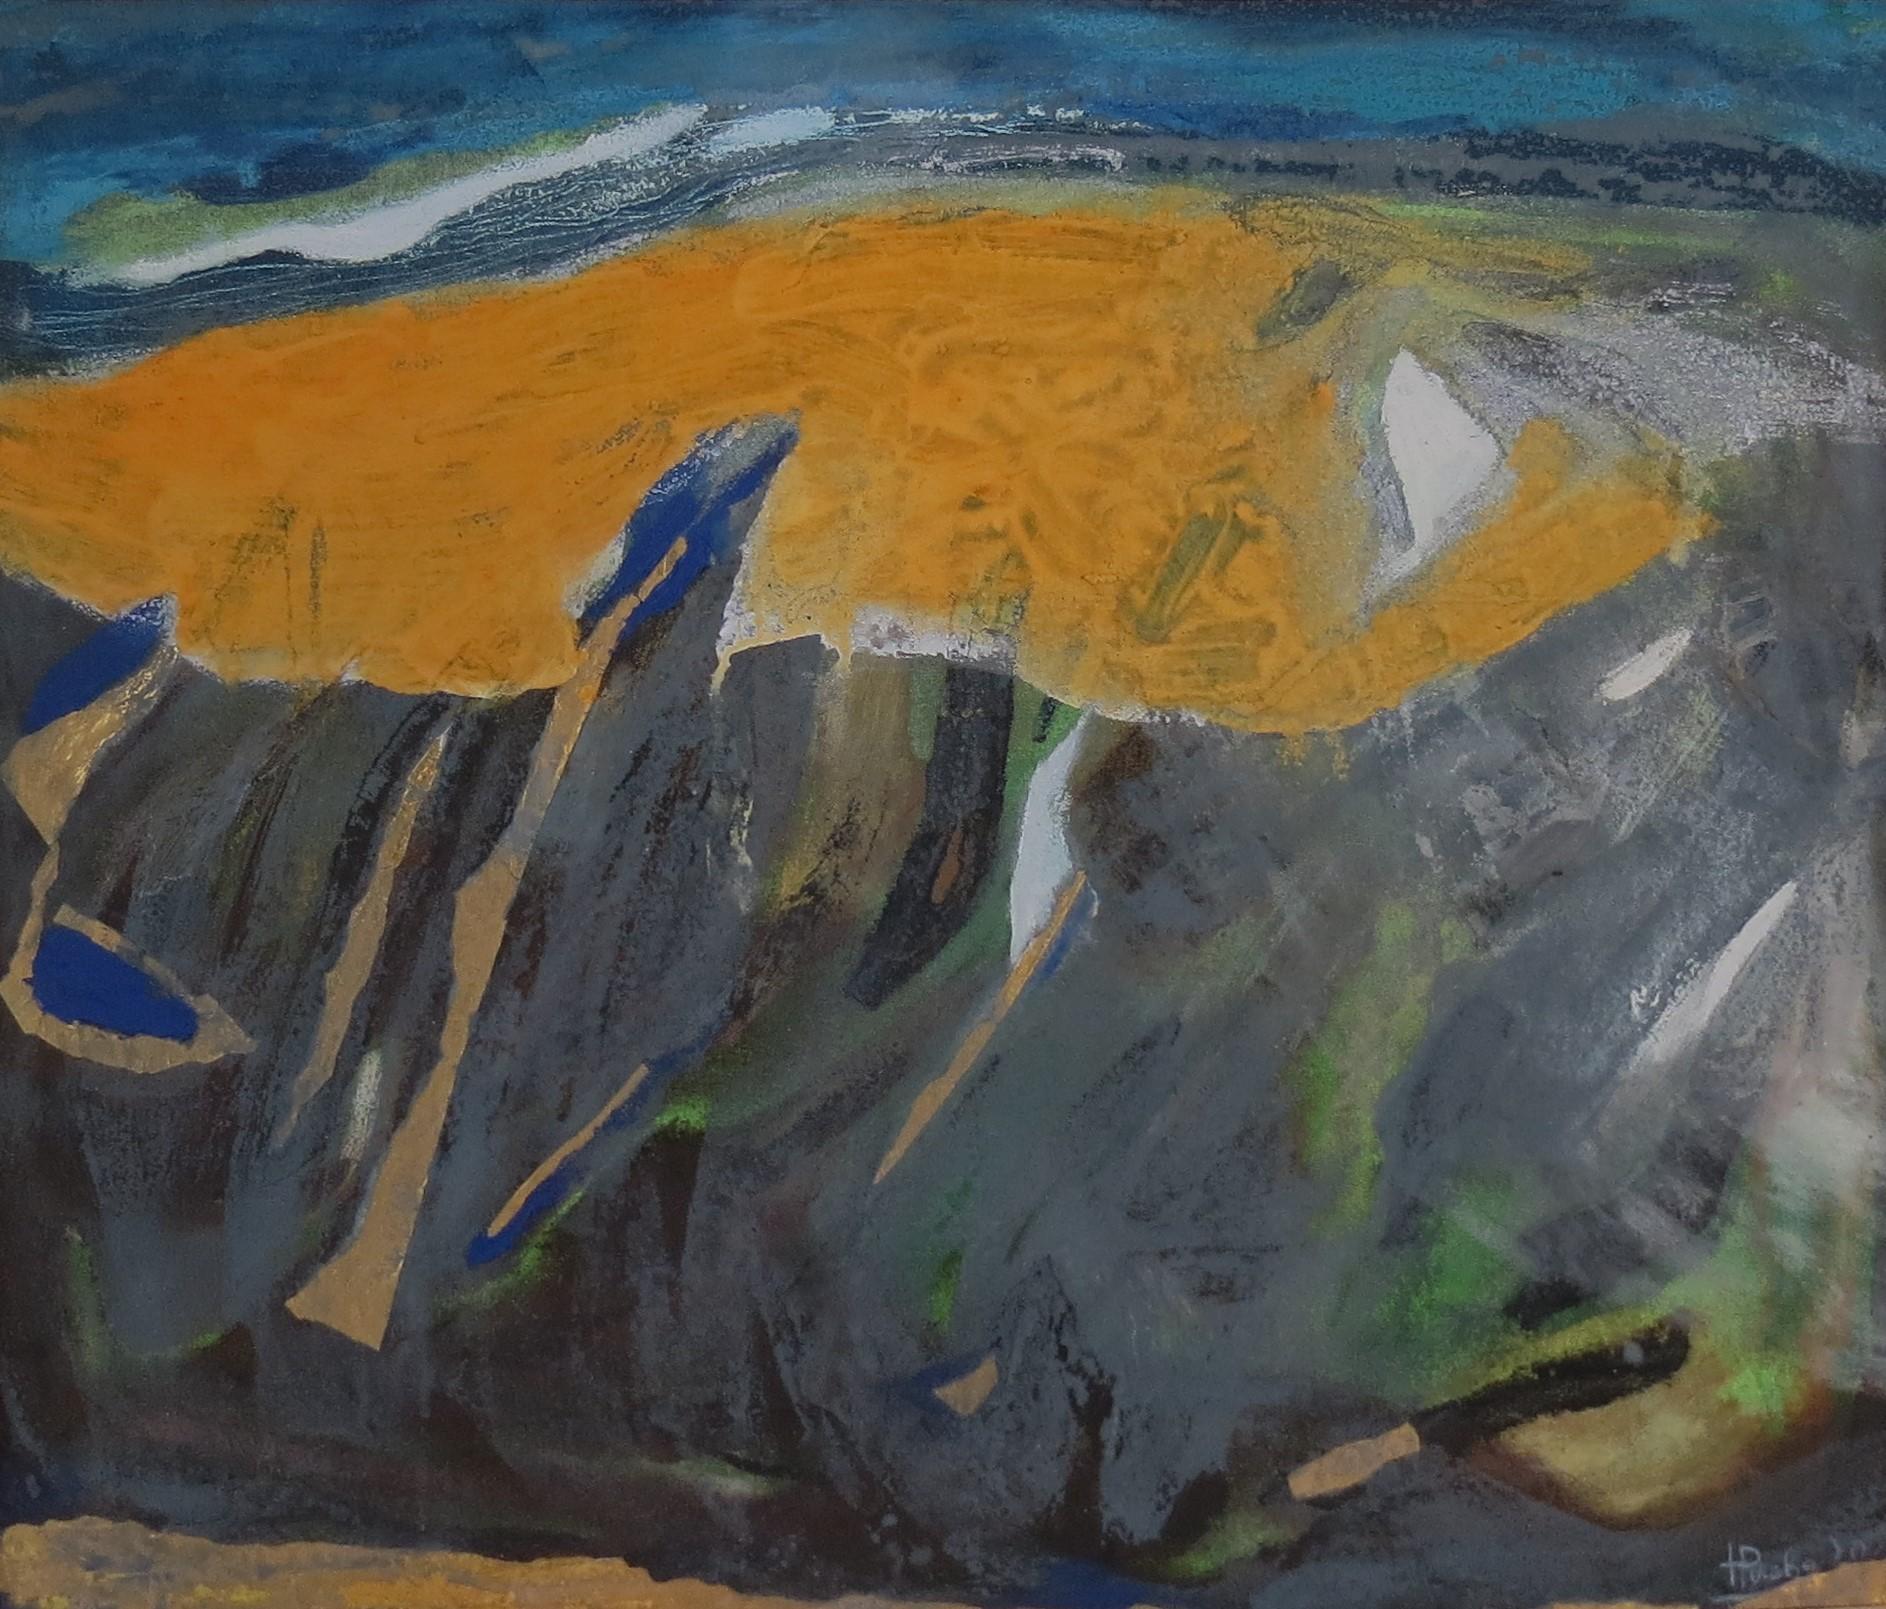 Abstract Painting Nina Ruseva - Mountain and Field - peinture abstraite orange, vert, bleu, gris, blanc et noir